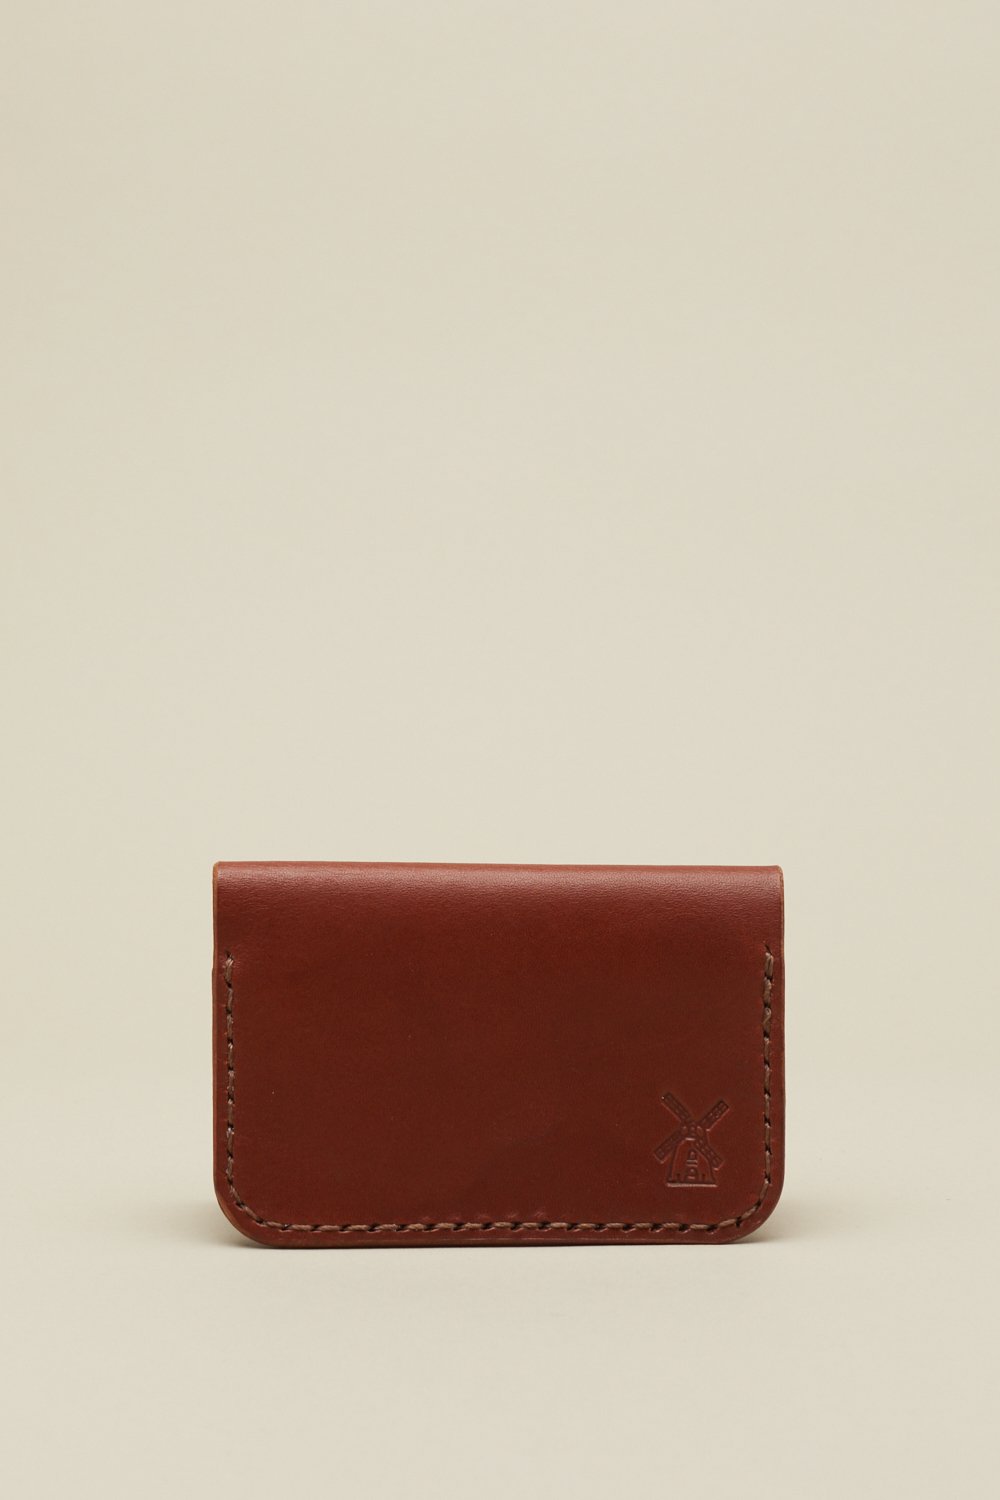 Image of Fold Wallet in Mahogany